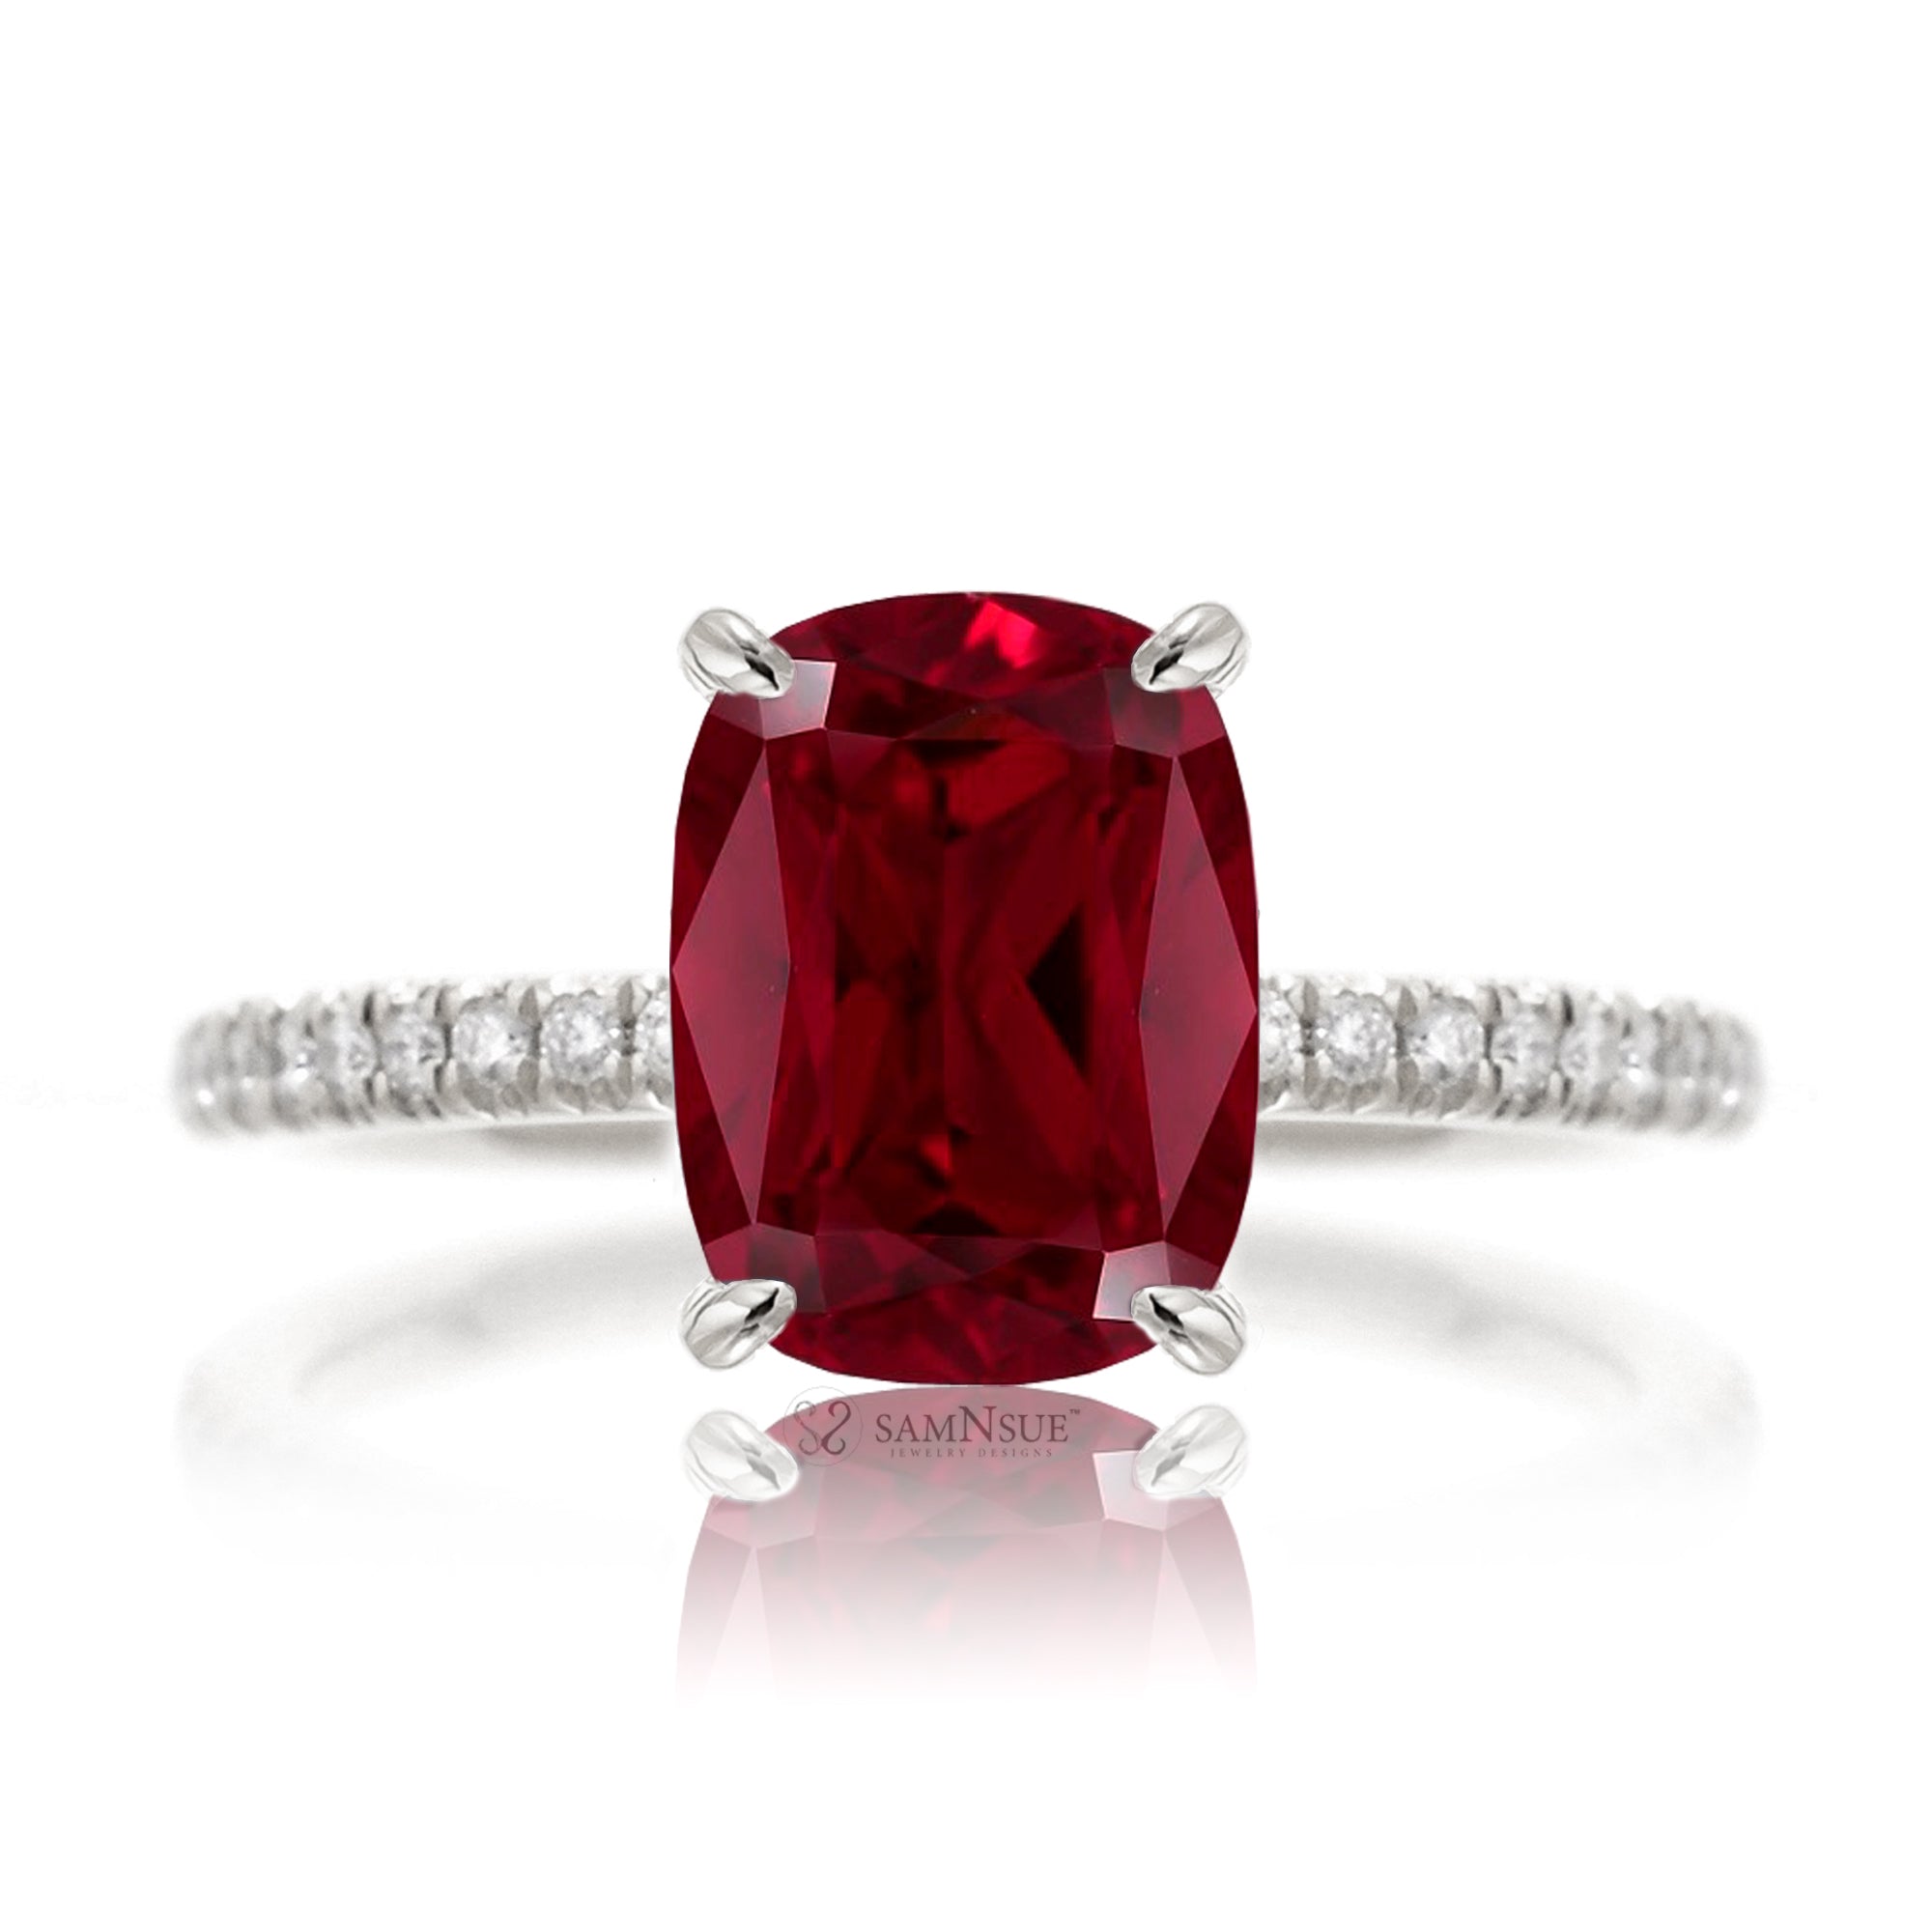 Cushion cut ruby diamond engagement ring white gold - the Ava